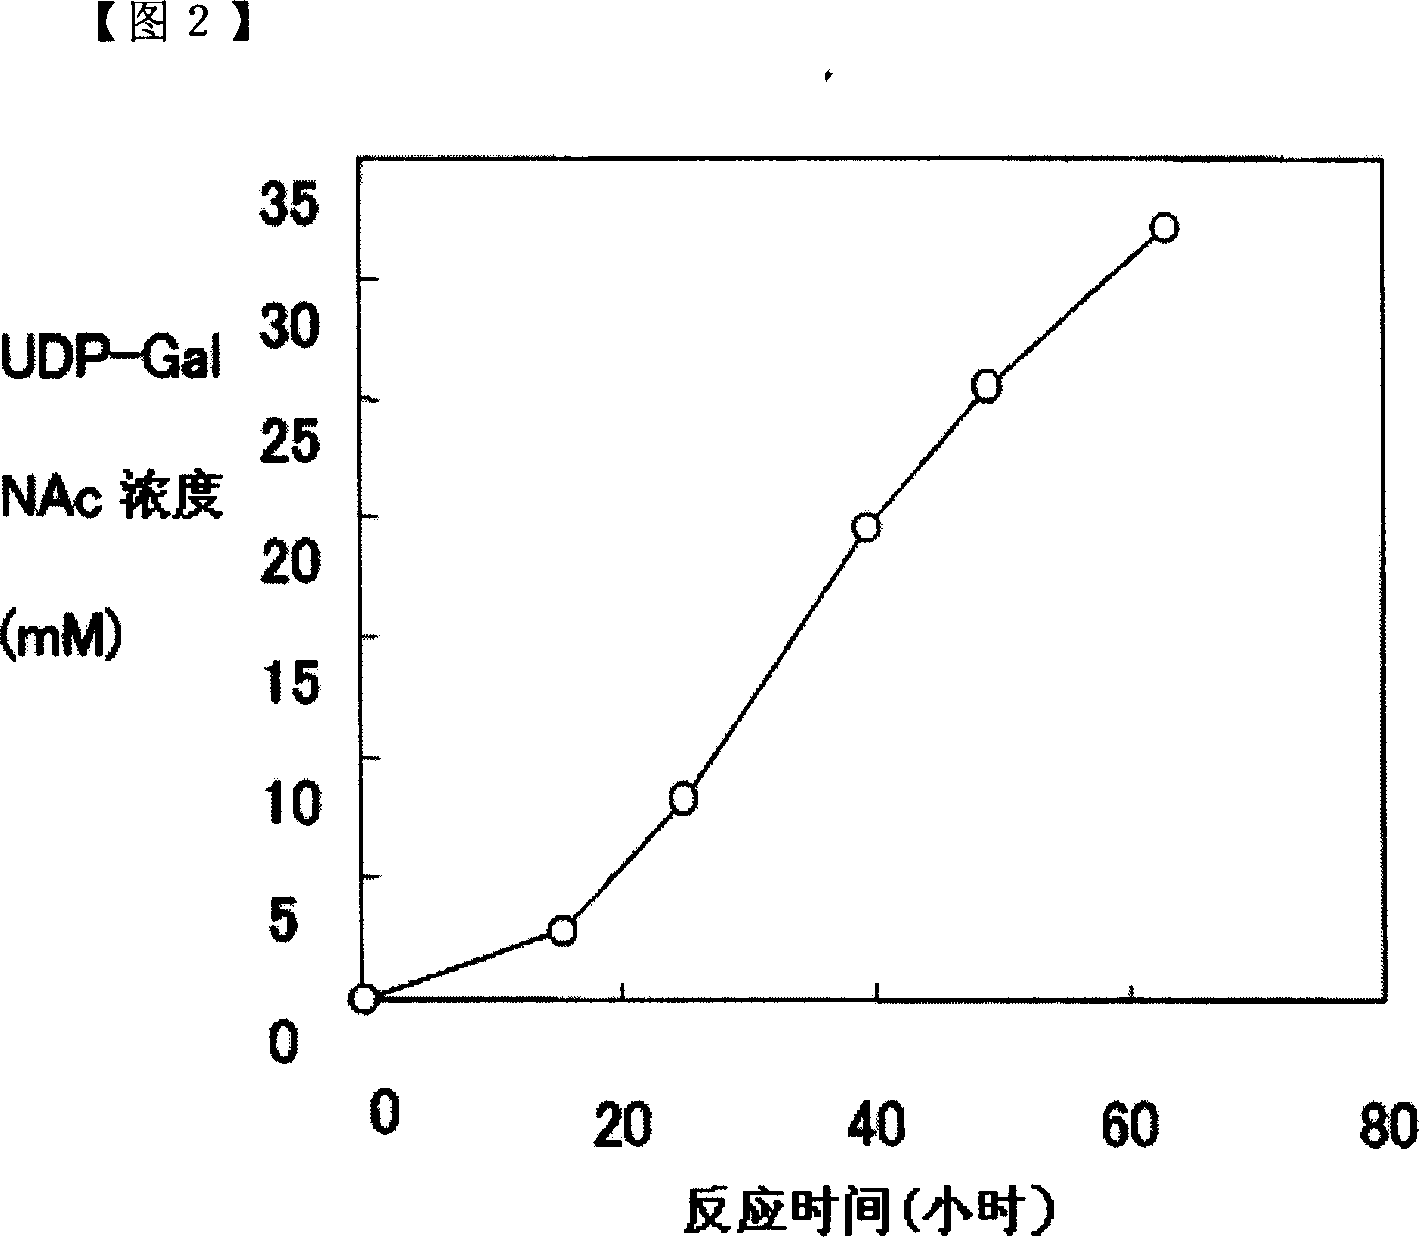 Method of producing uridine 5'-diphospho-N-acetylgalactosamine